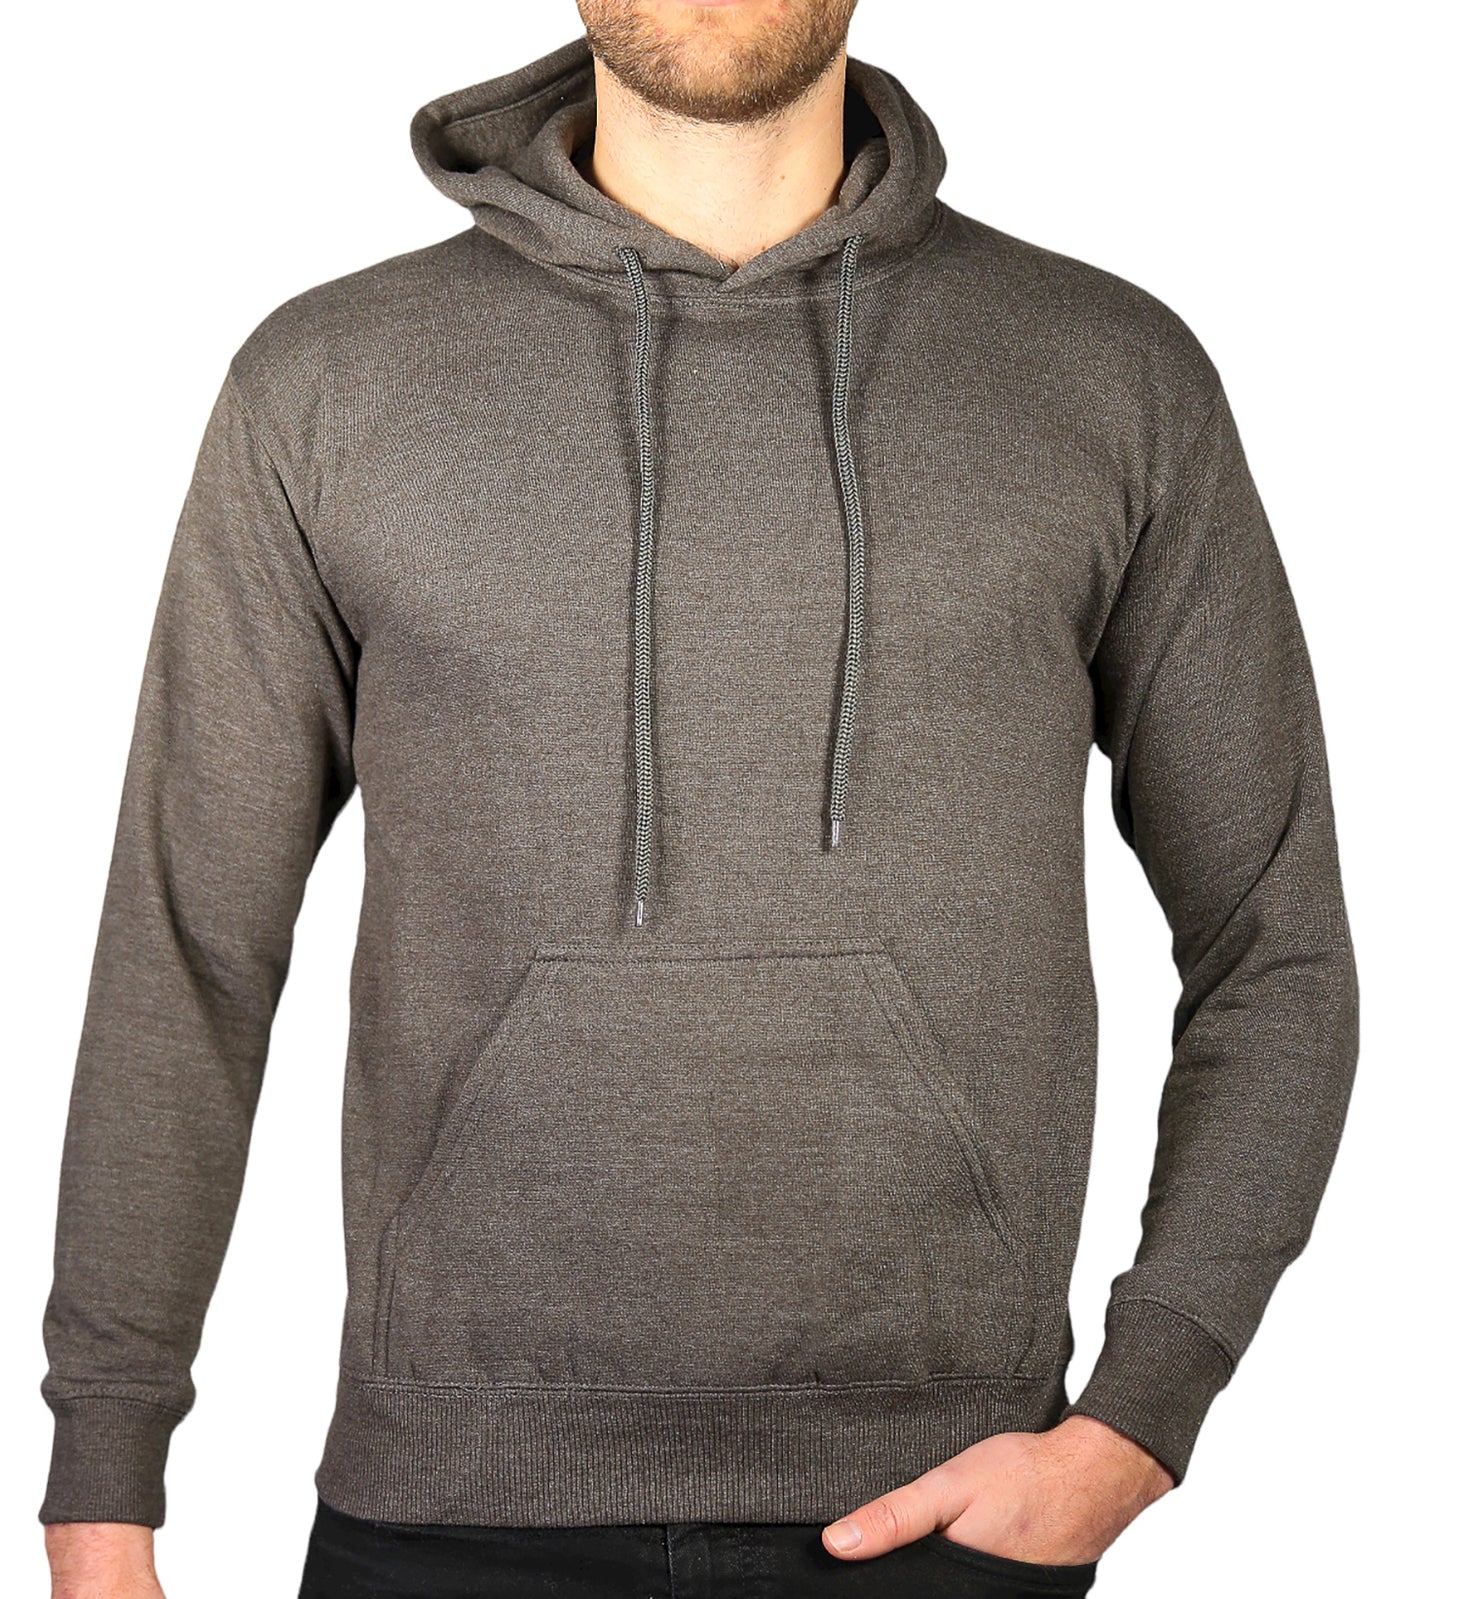 Adult Mens 100% Cotton Fleece Hoodie Jumper Pullover Sweater Warm Sweatshirt - Charcoal Grey - XL